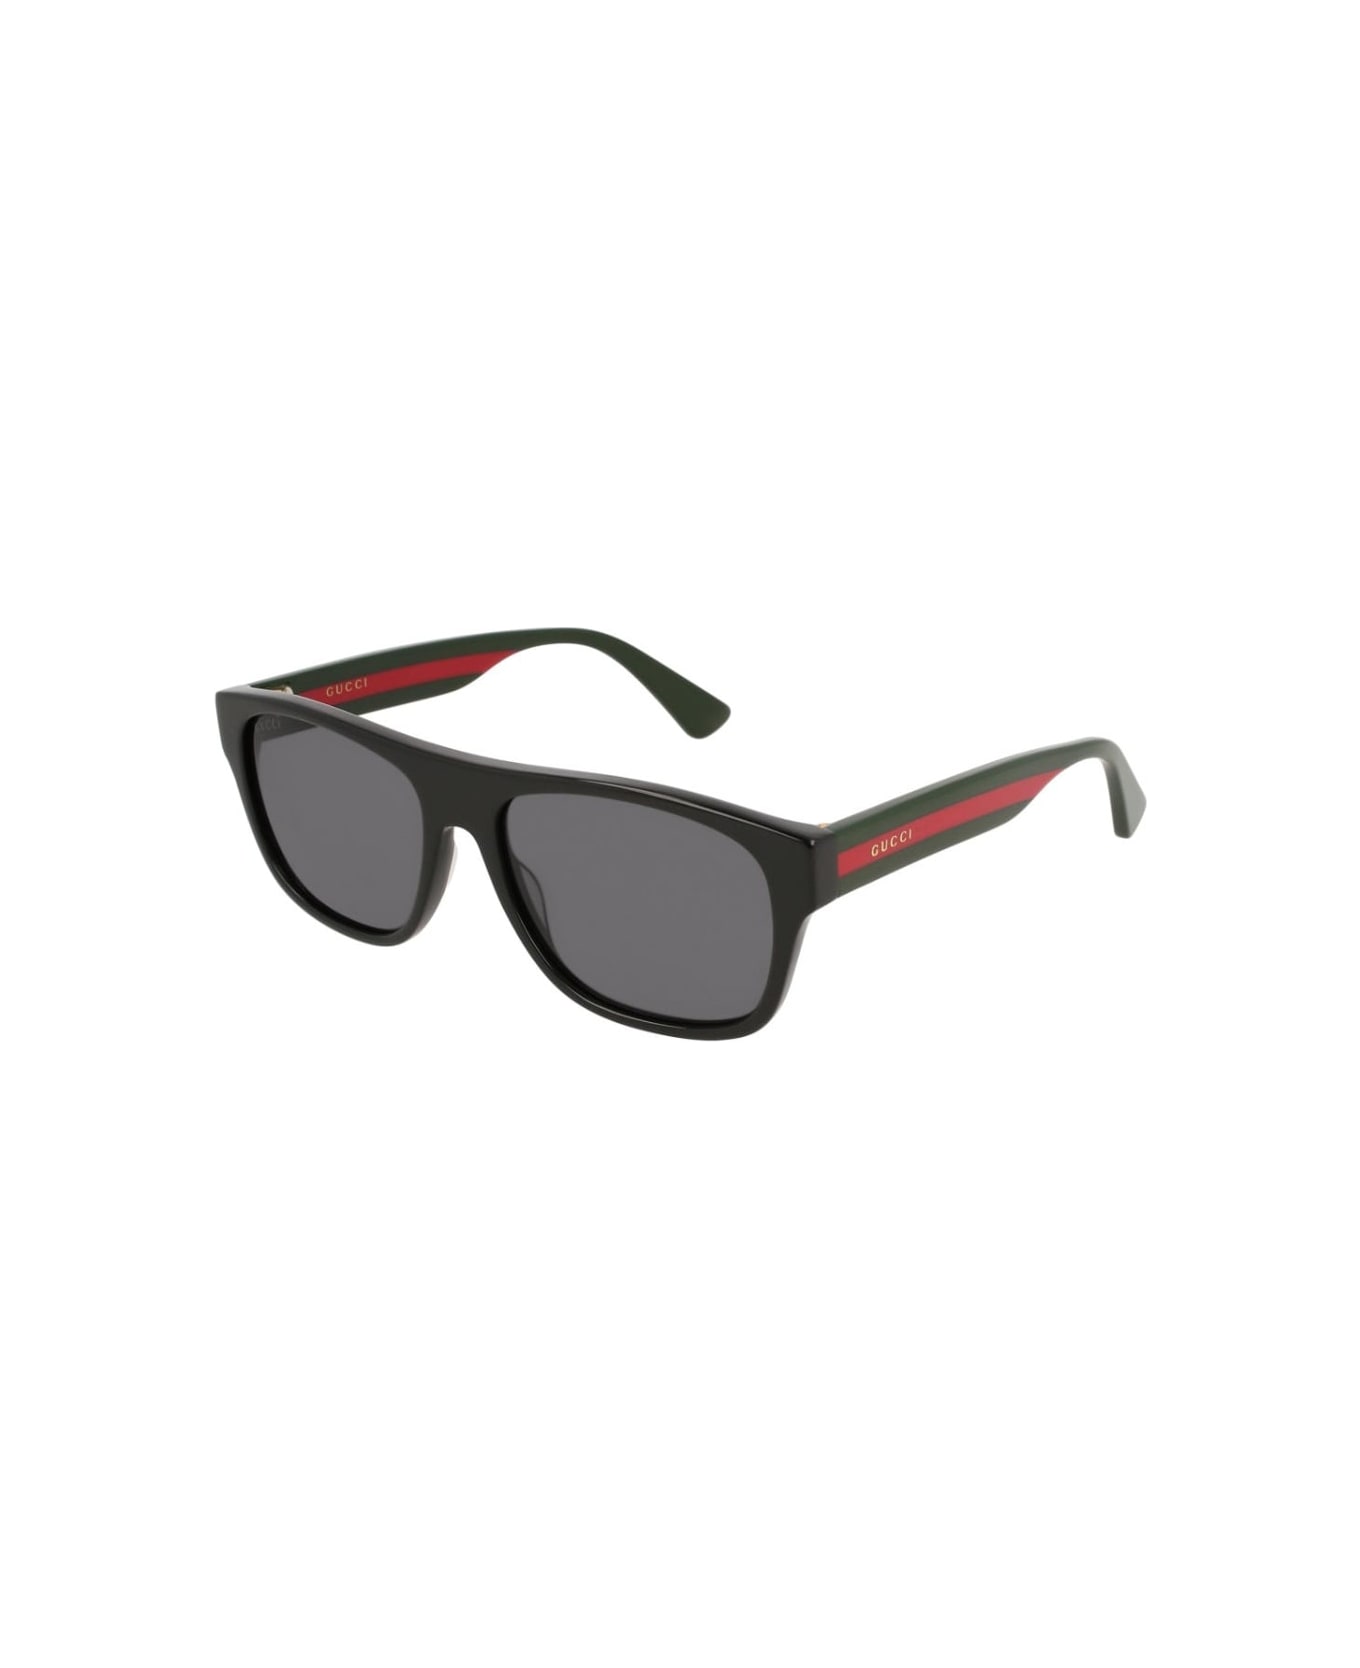 Gucci Eyewear GG0341 001 Sunglasses